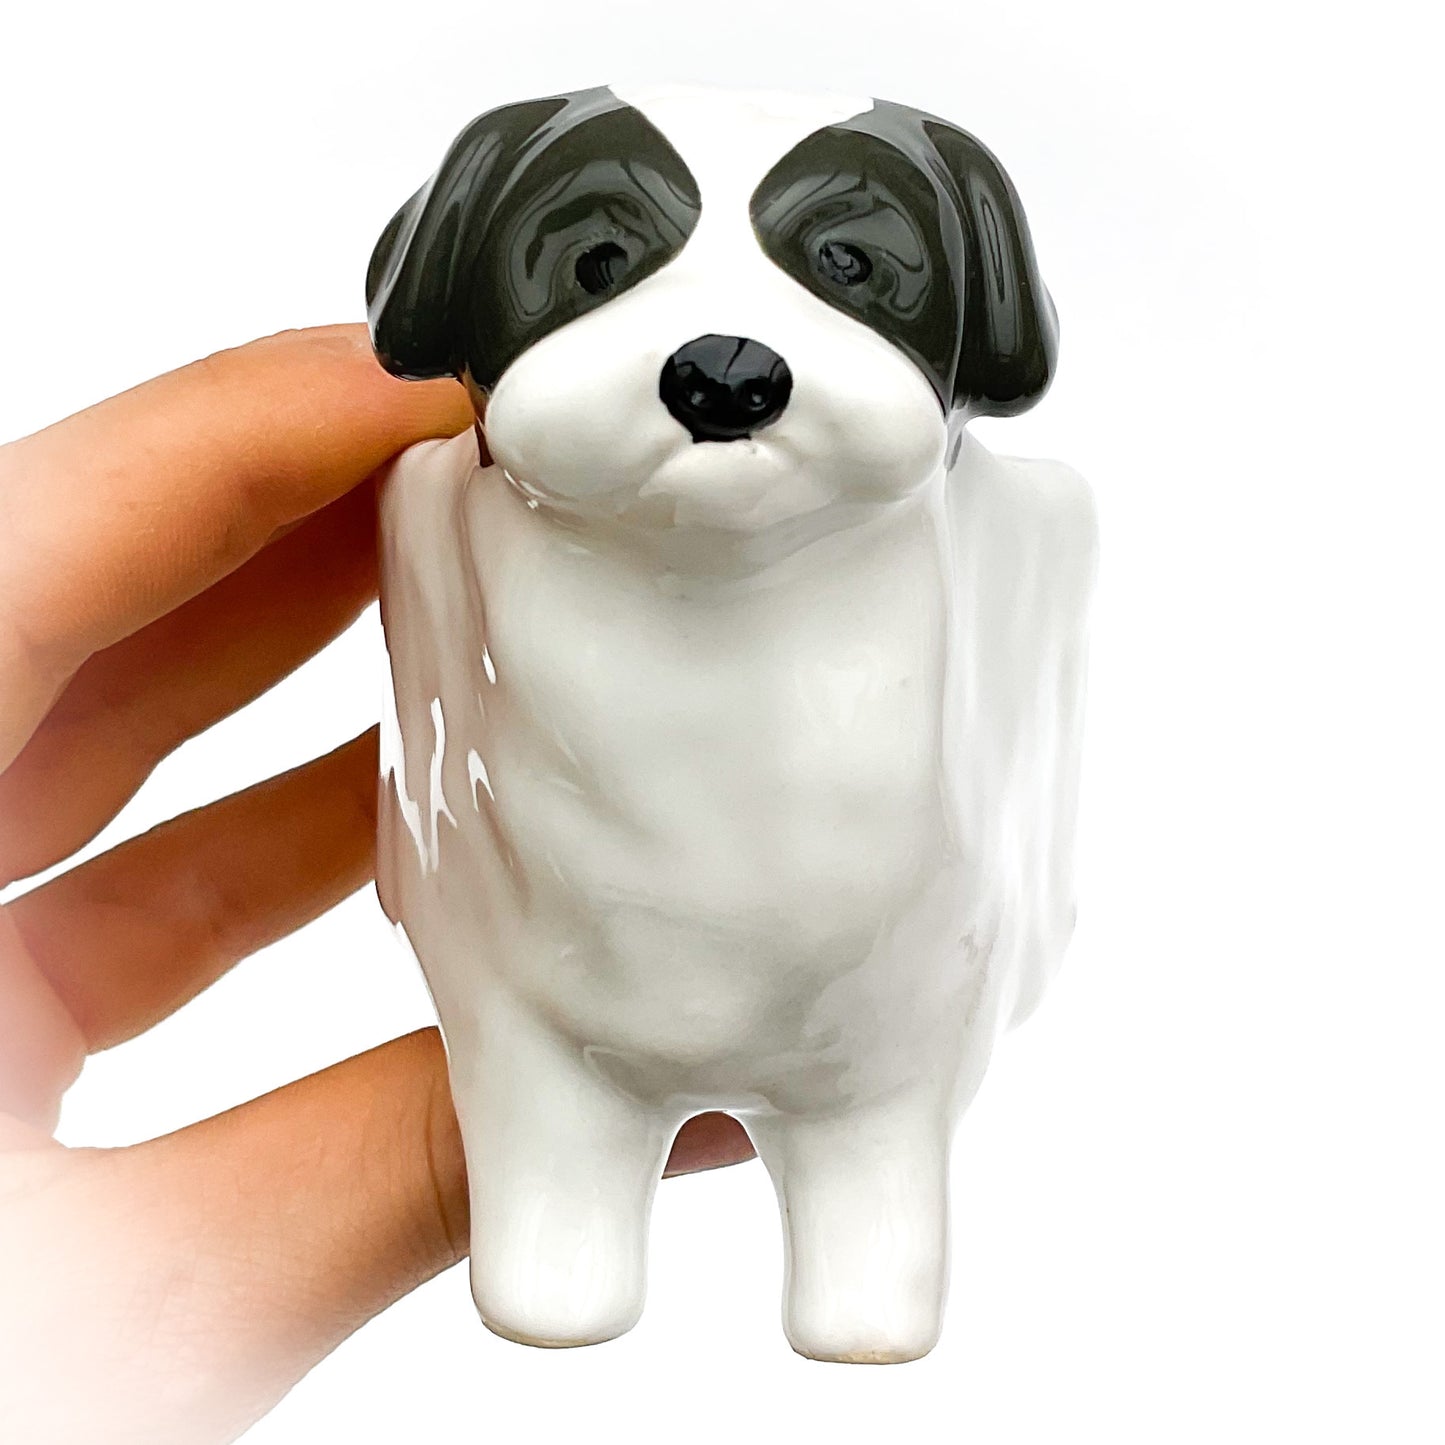 Shih Tzu Dog Planter - Ceramic Dog Plant Pot